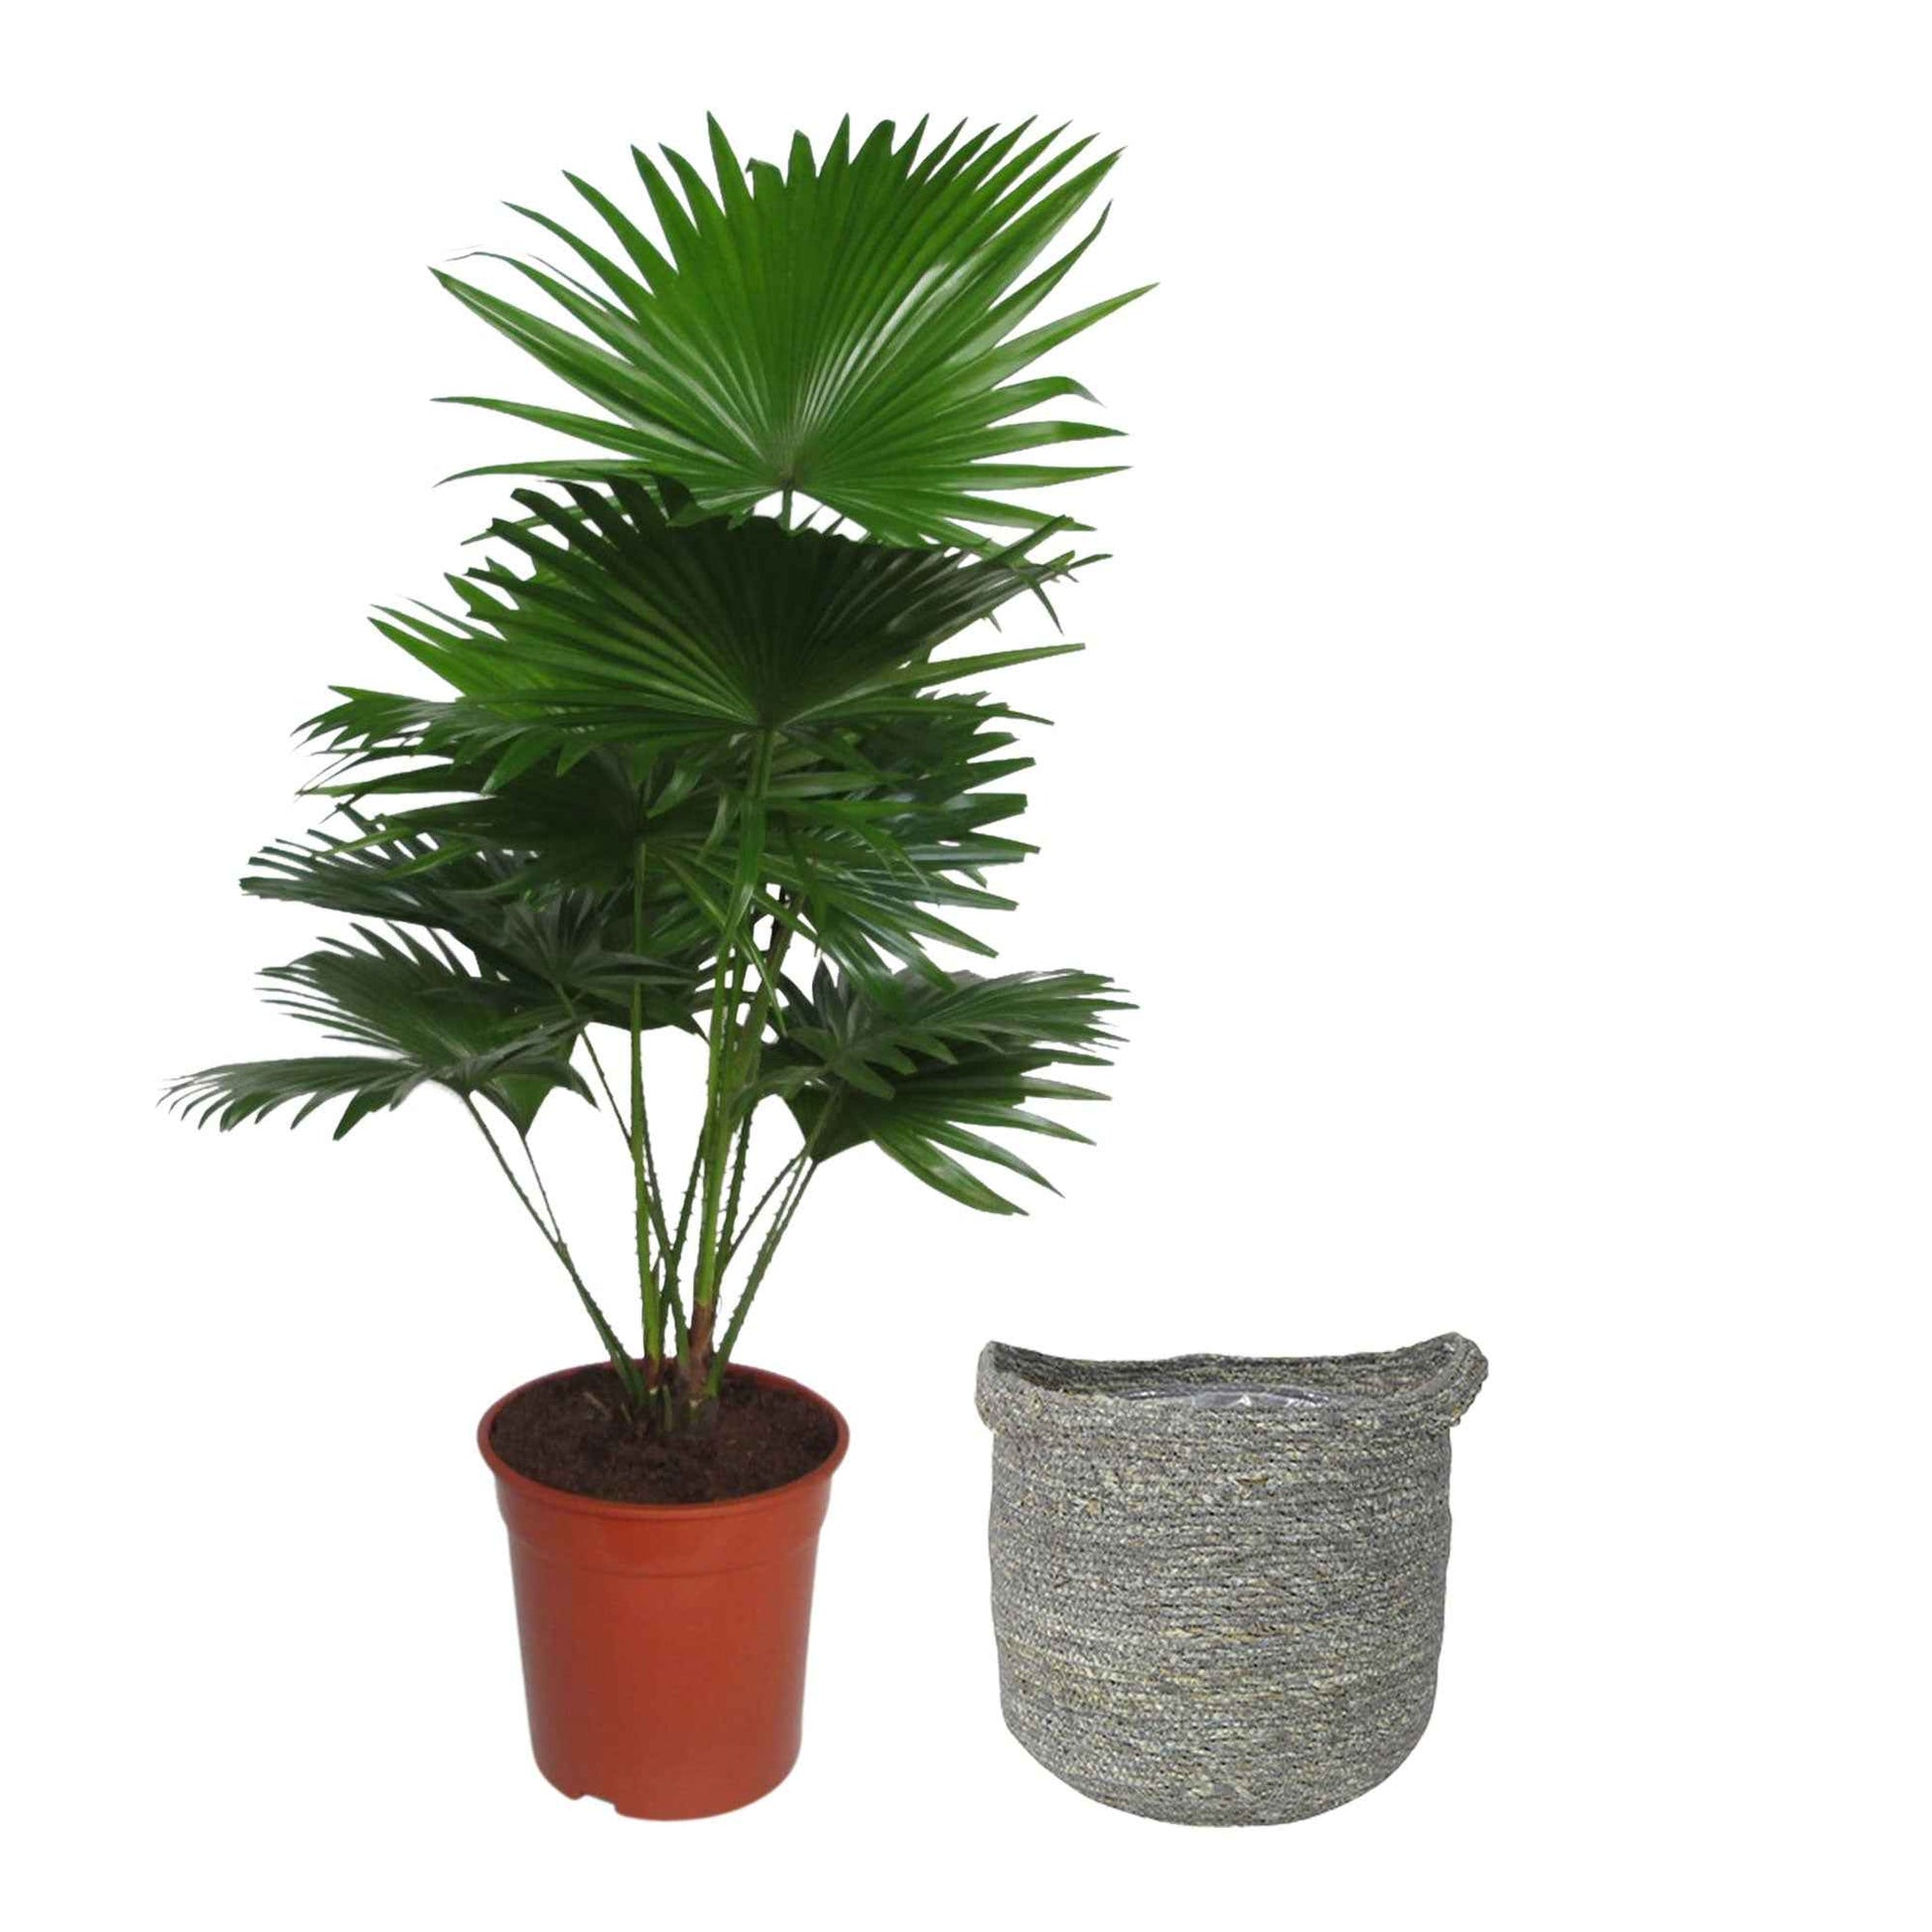 Kentia-Palme Livistona rotundifolia inkl. Weidenkorb, grau - Grüne Zimmerpflanzen